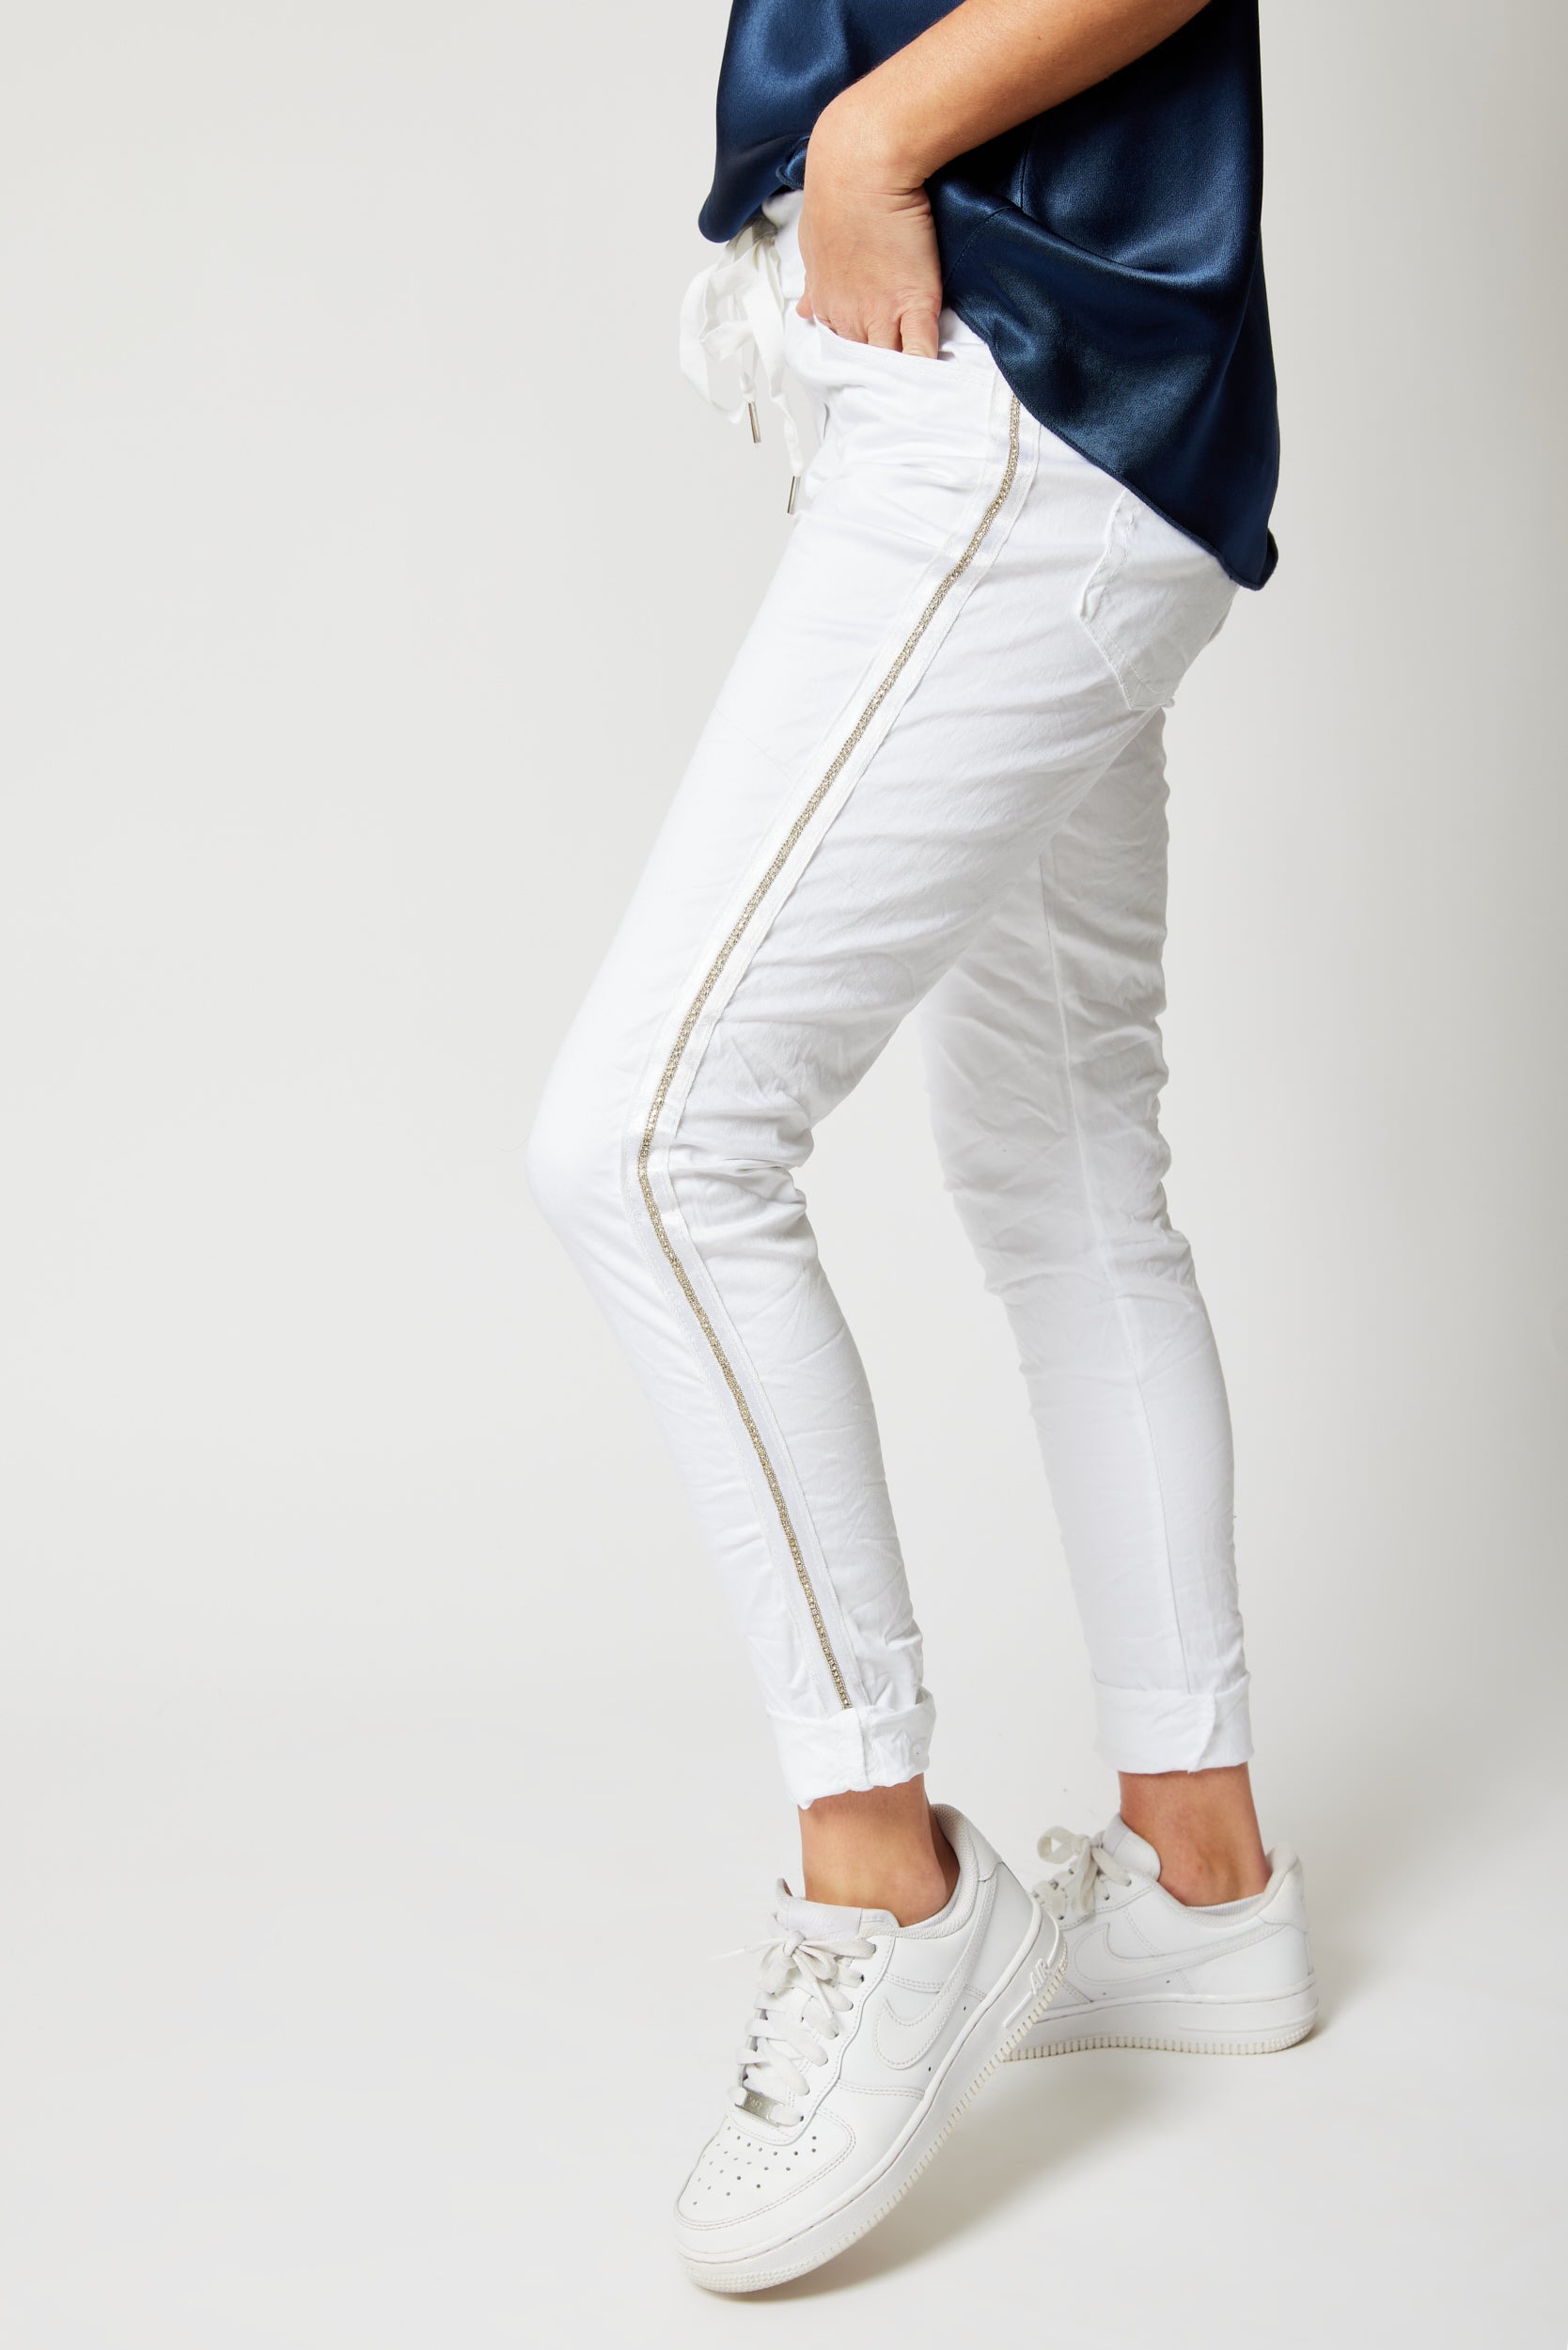 Rhinestone Super-Stretch Italian Pants Solid Colors - Jacqueline B Clothing